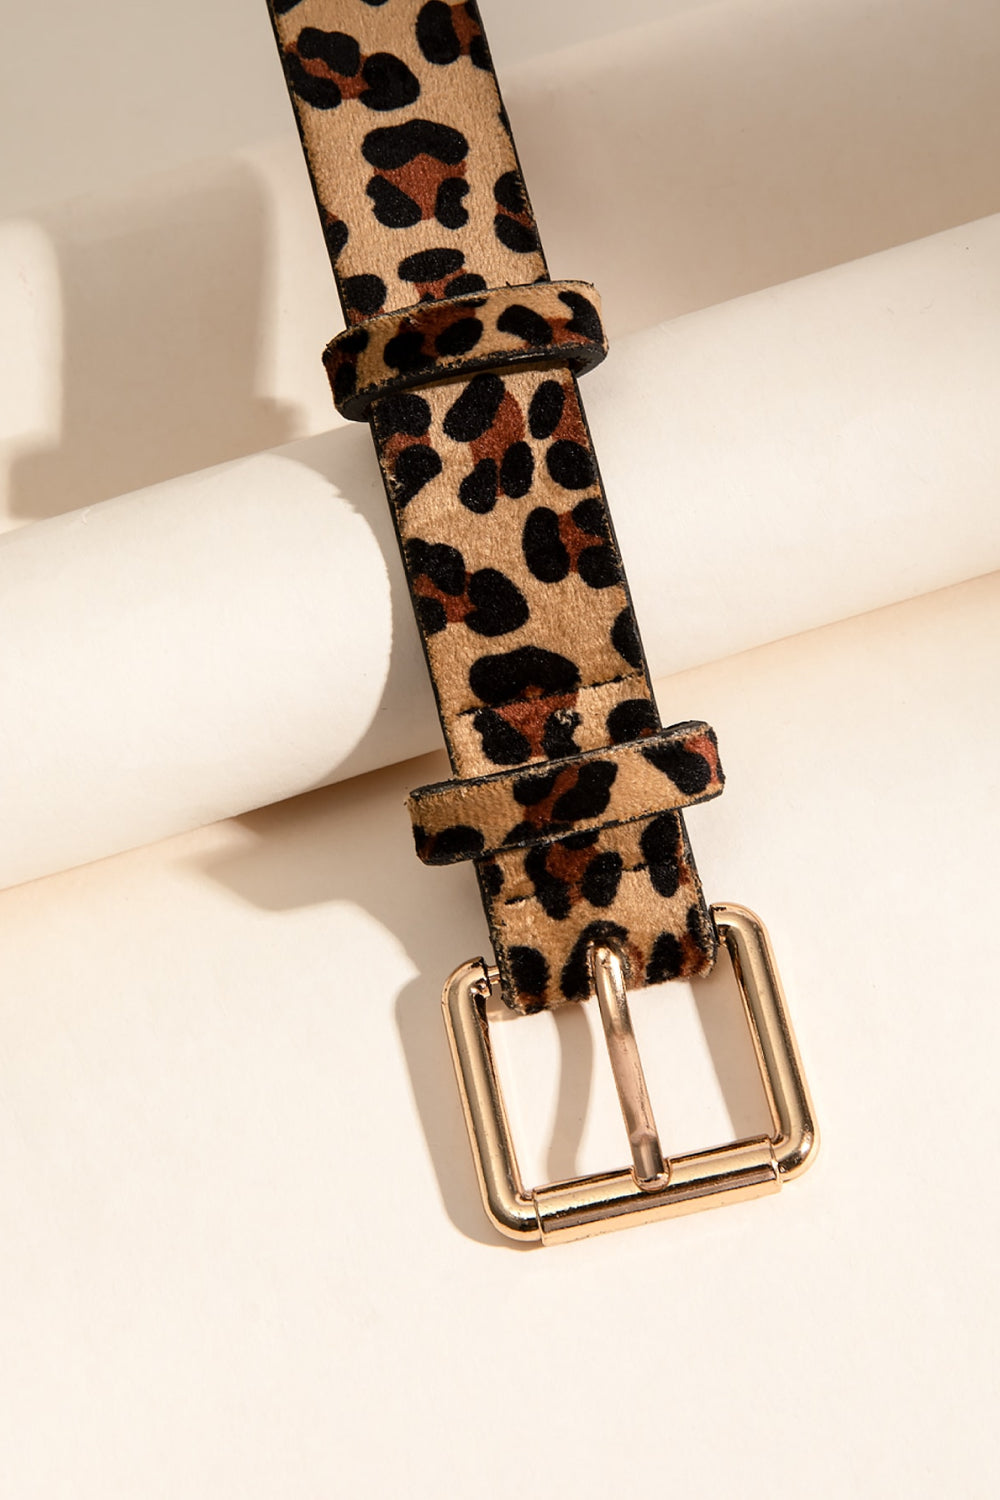 Leopard PU Leather Belt